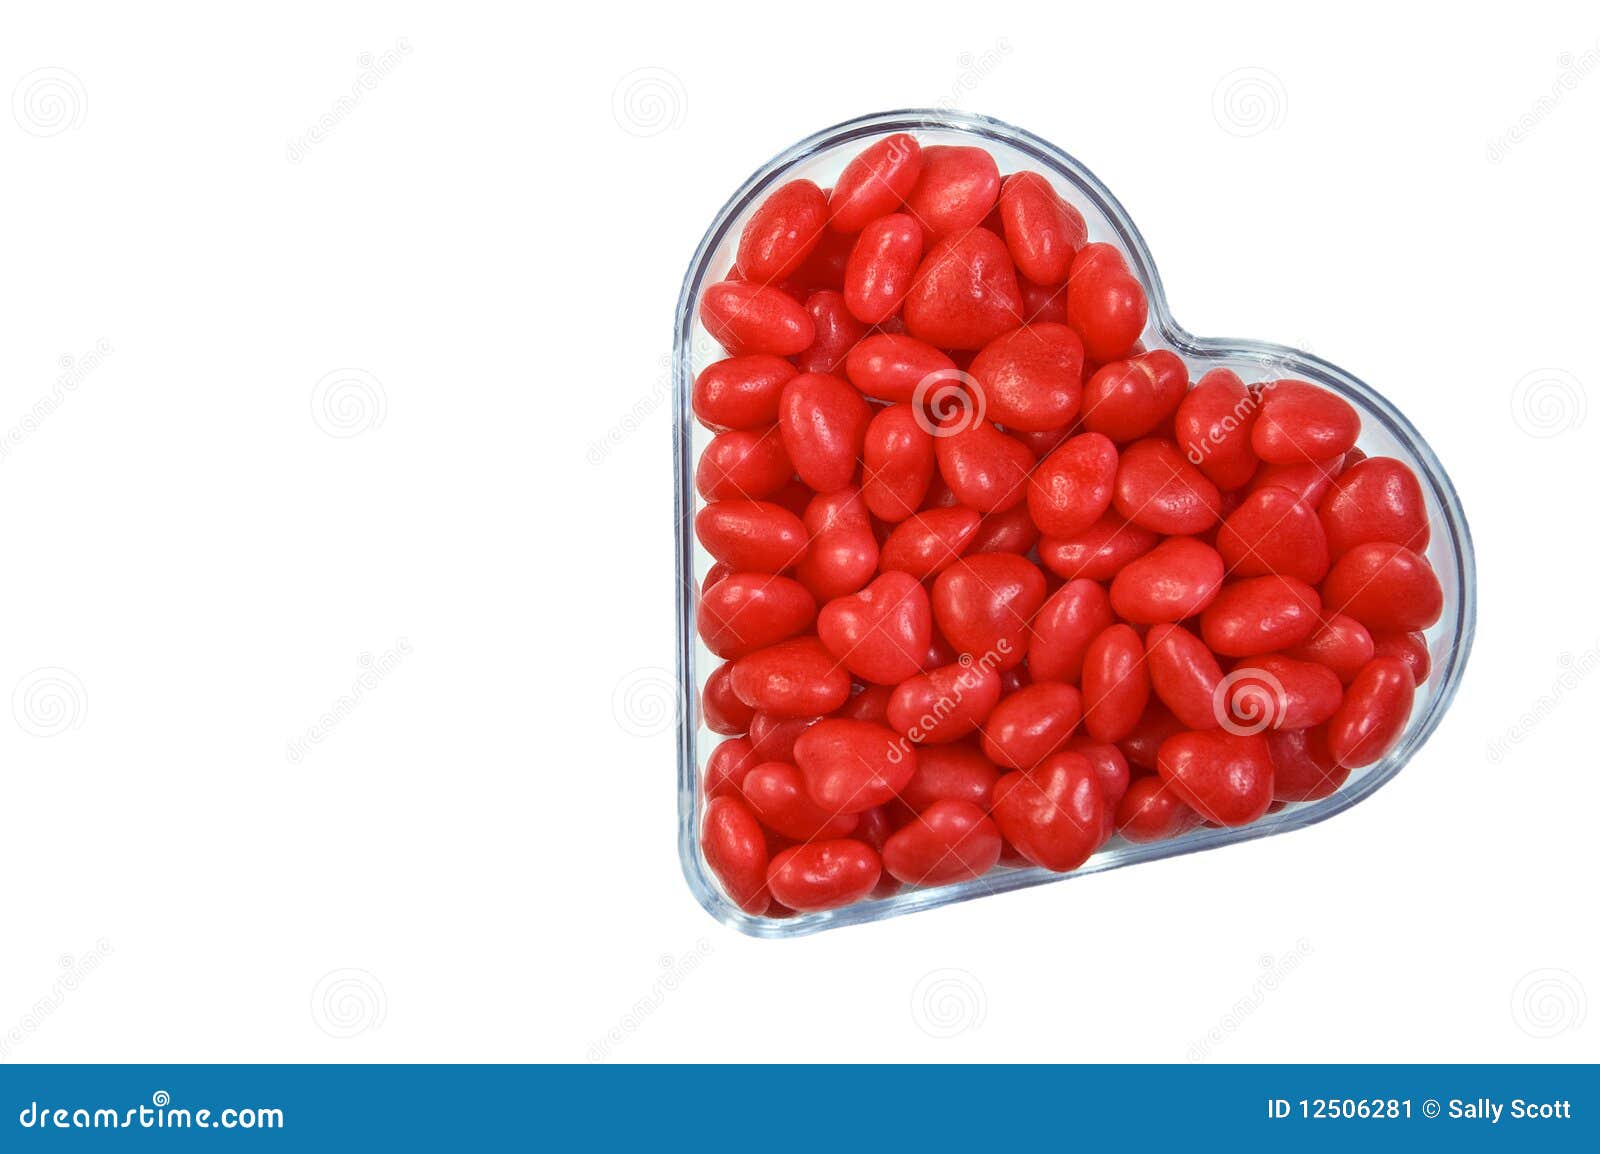 Cinnamon hearts stock image. Image of traditional, shape - 12506281